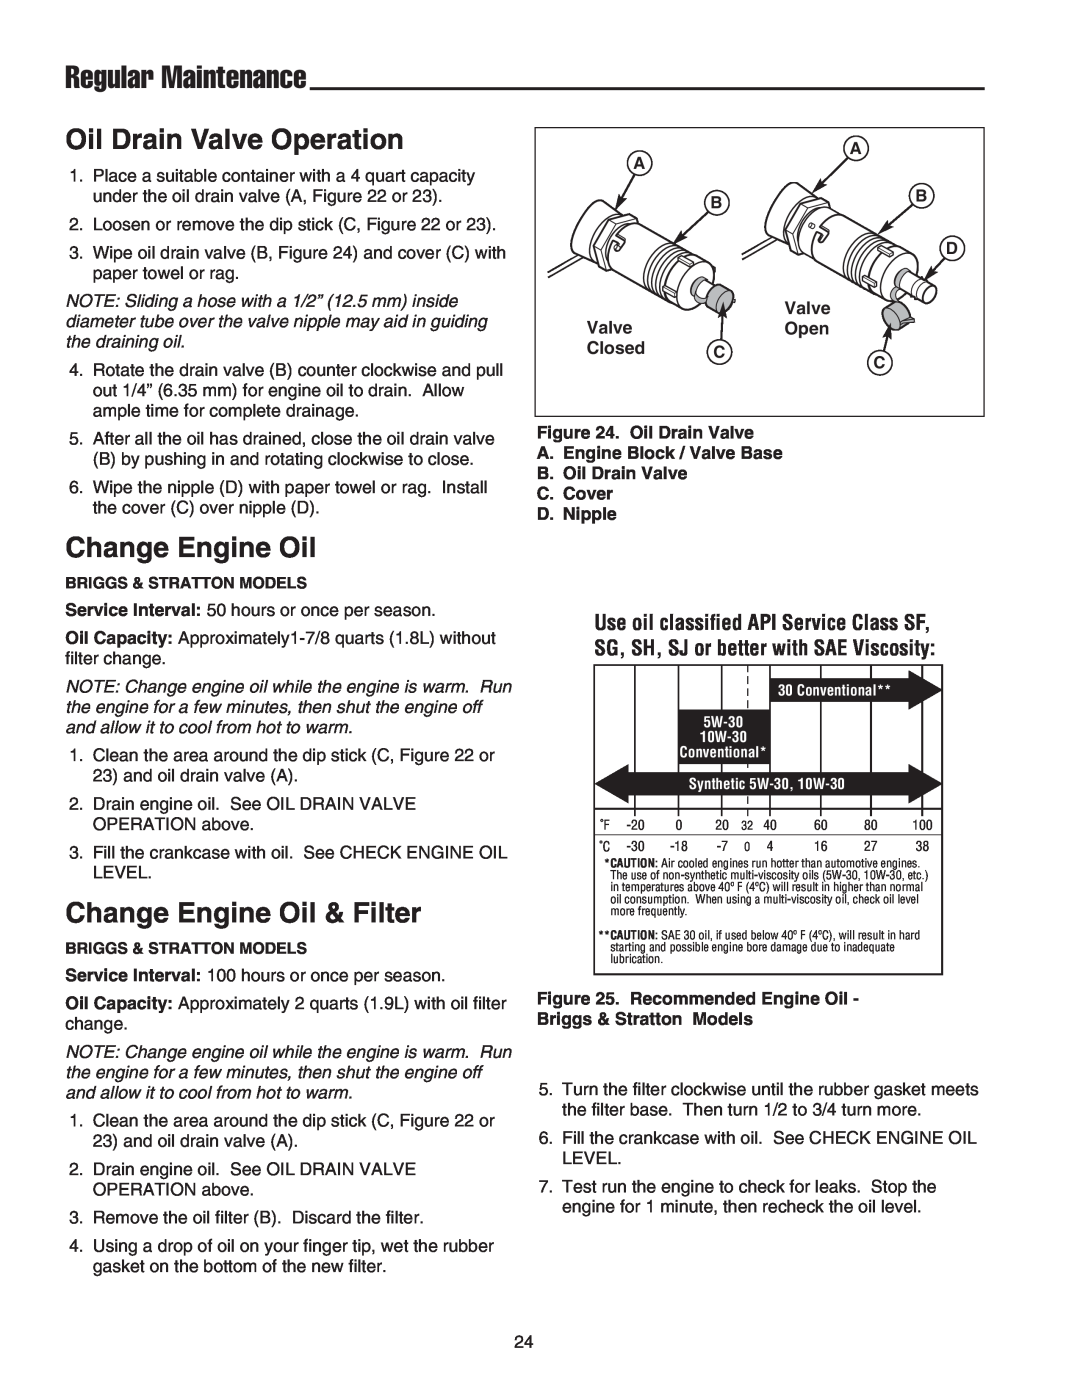 Snapper LT-200 manual Oil Drain Valve Operation, Change Engine Oil & Filter, Regular Maintenance, 5W-30, Conventional 